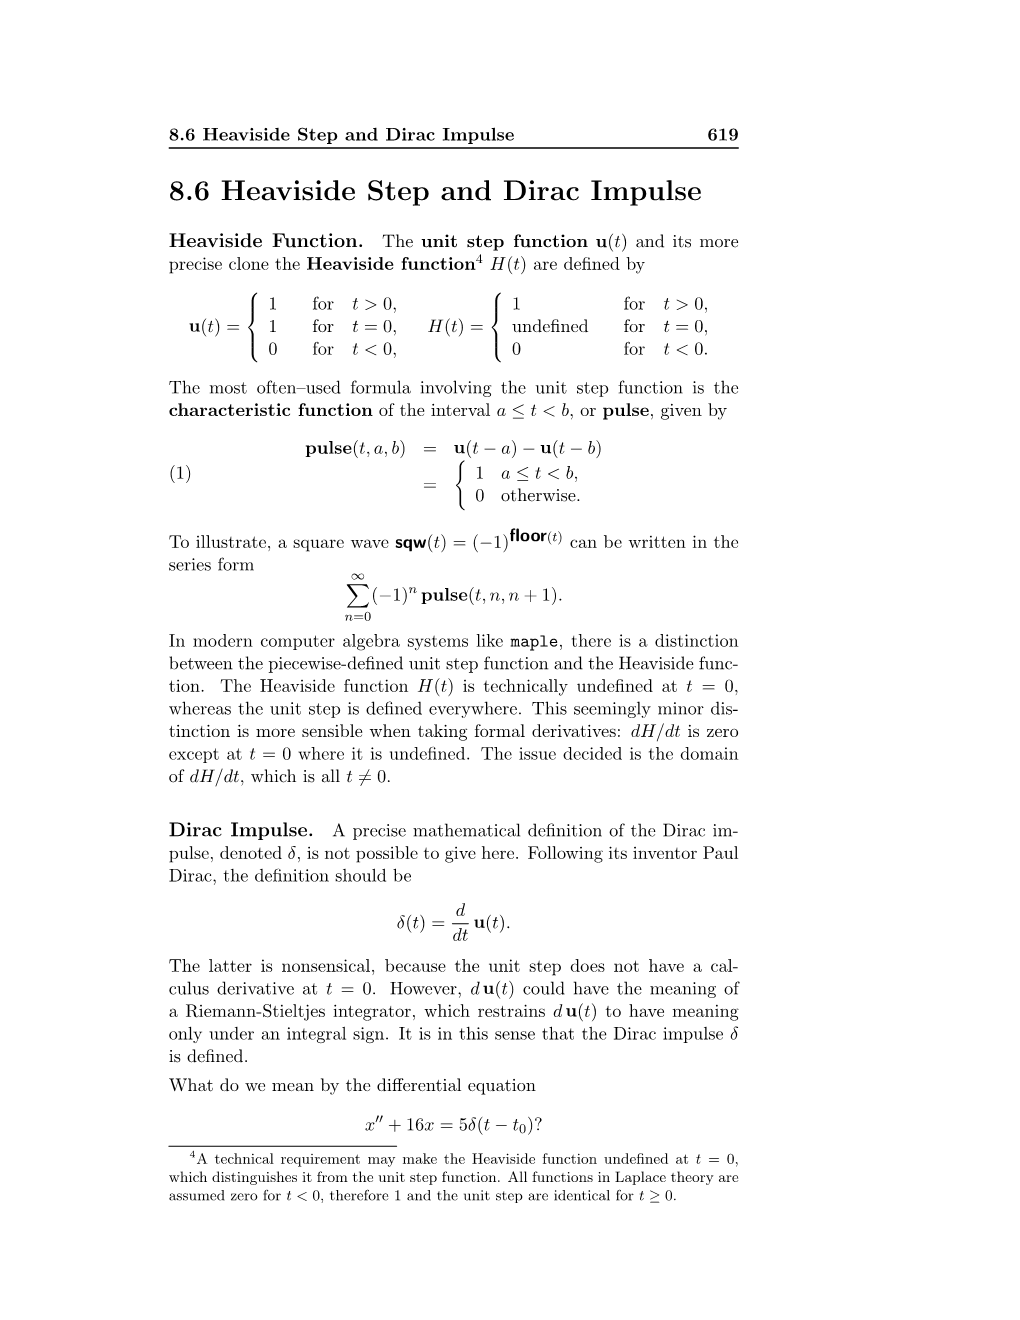 8.6 Heaviside Step and Dirac Impulse 619